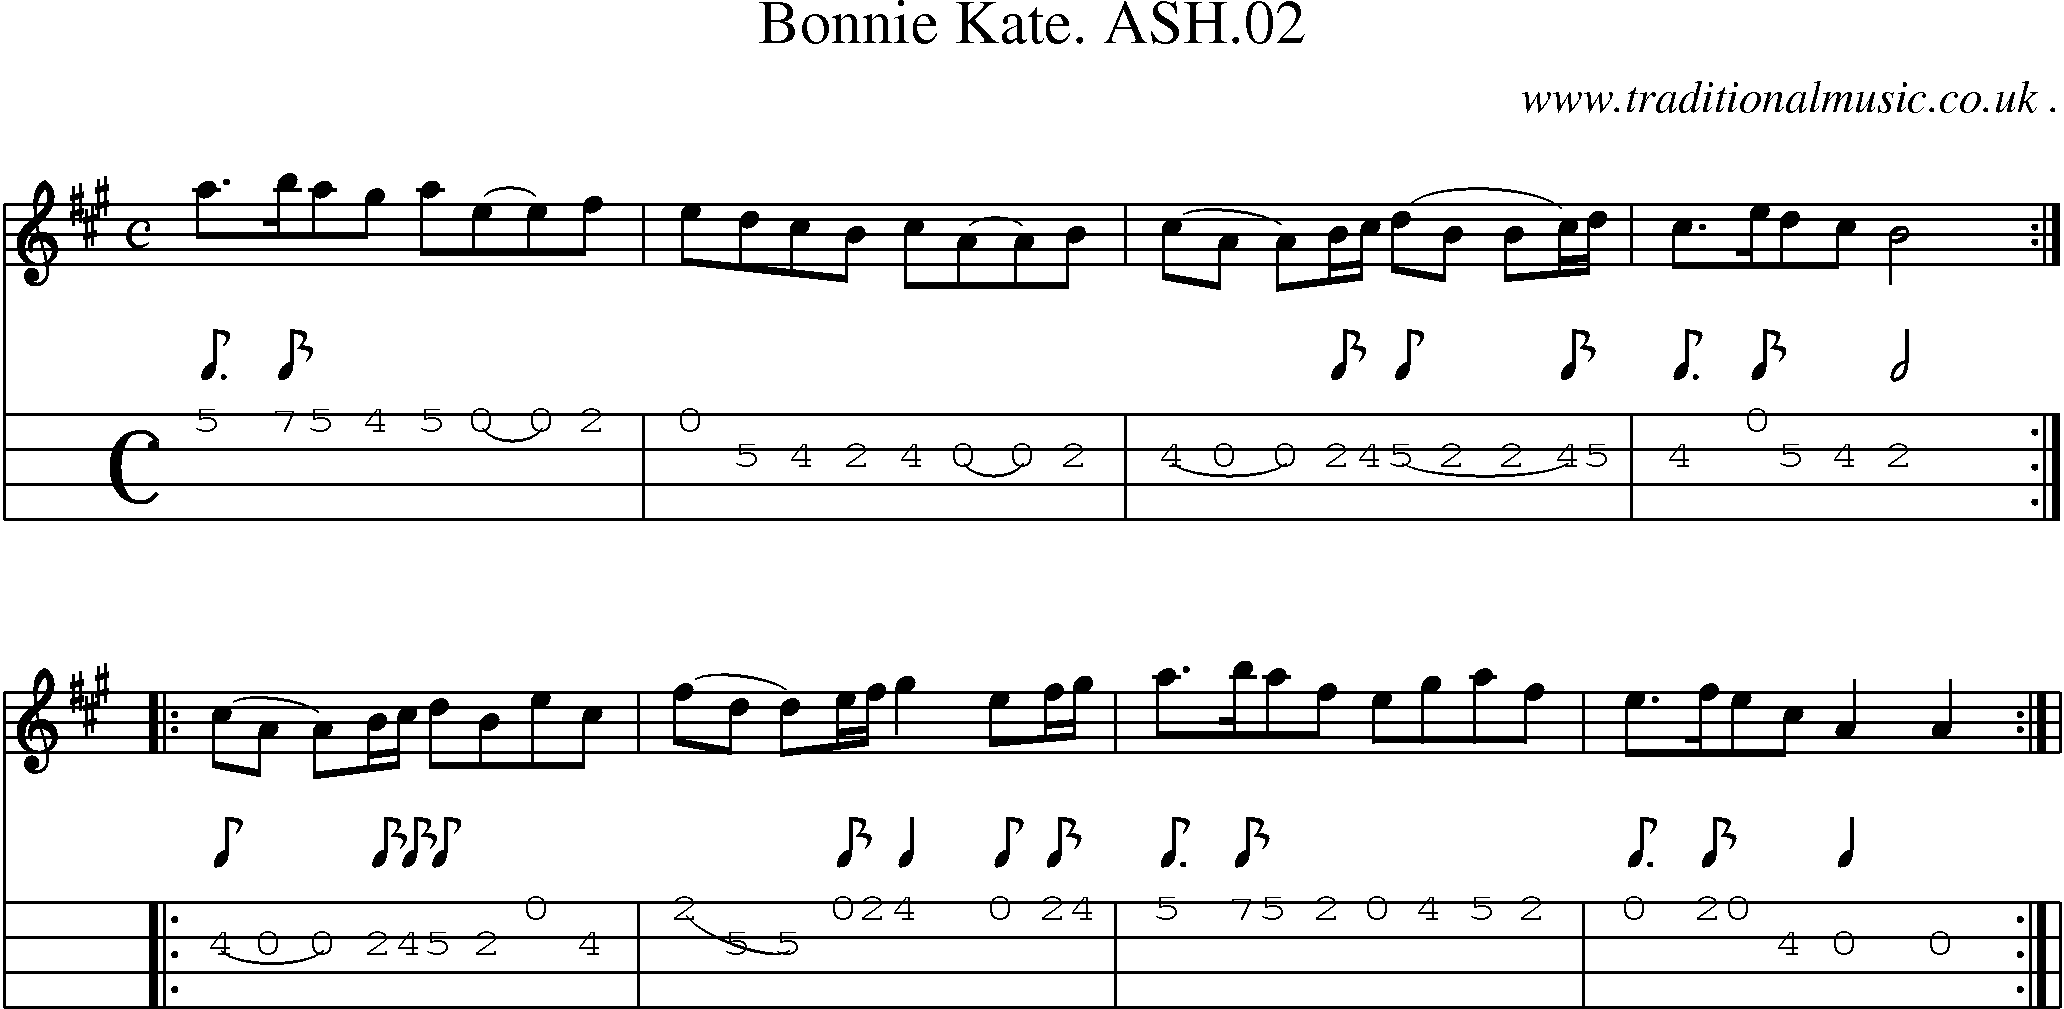 Sheet-Music and Mandolin Tabs for Bonnie Kate Ash02